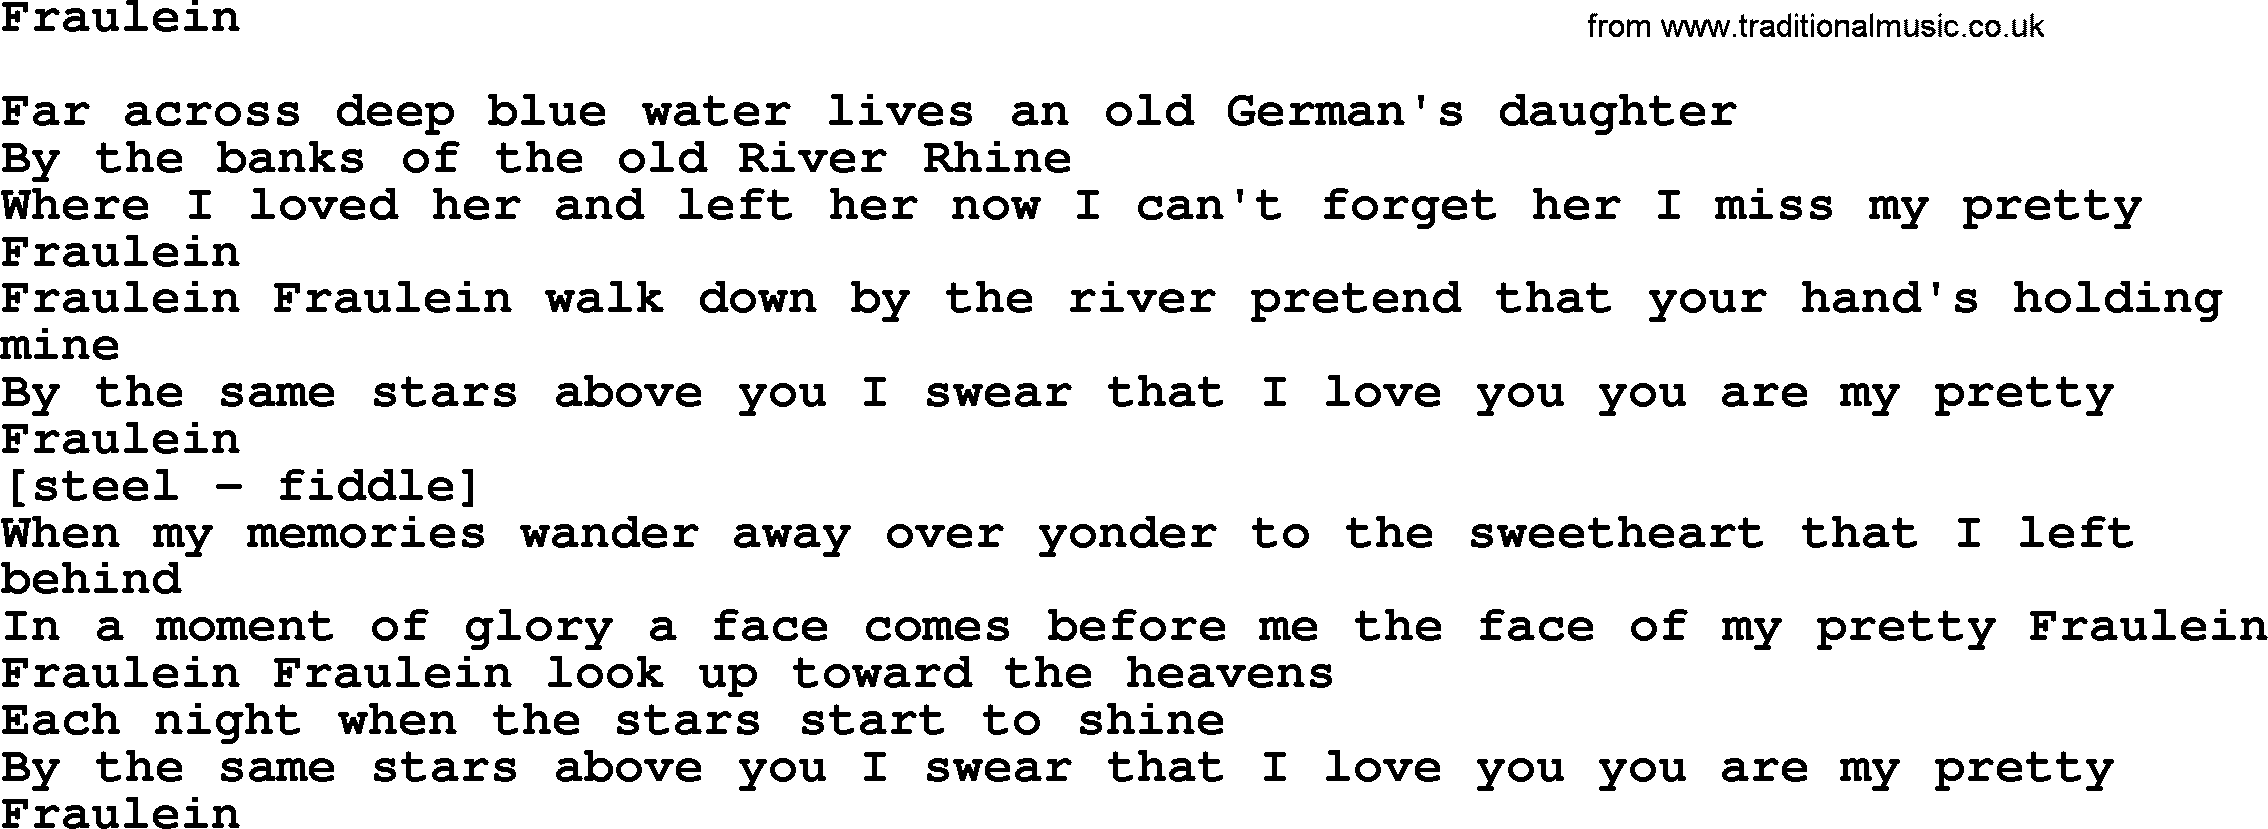 Willie Nelson song: Fraulein lyrics